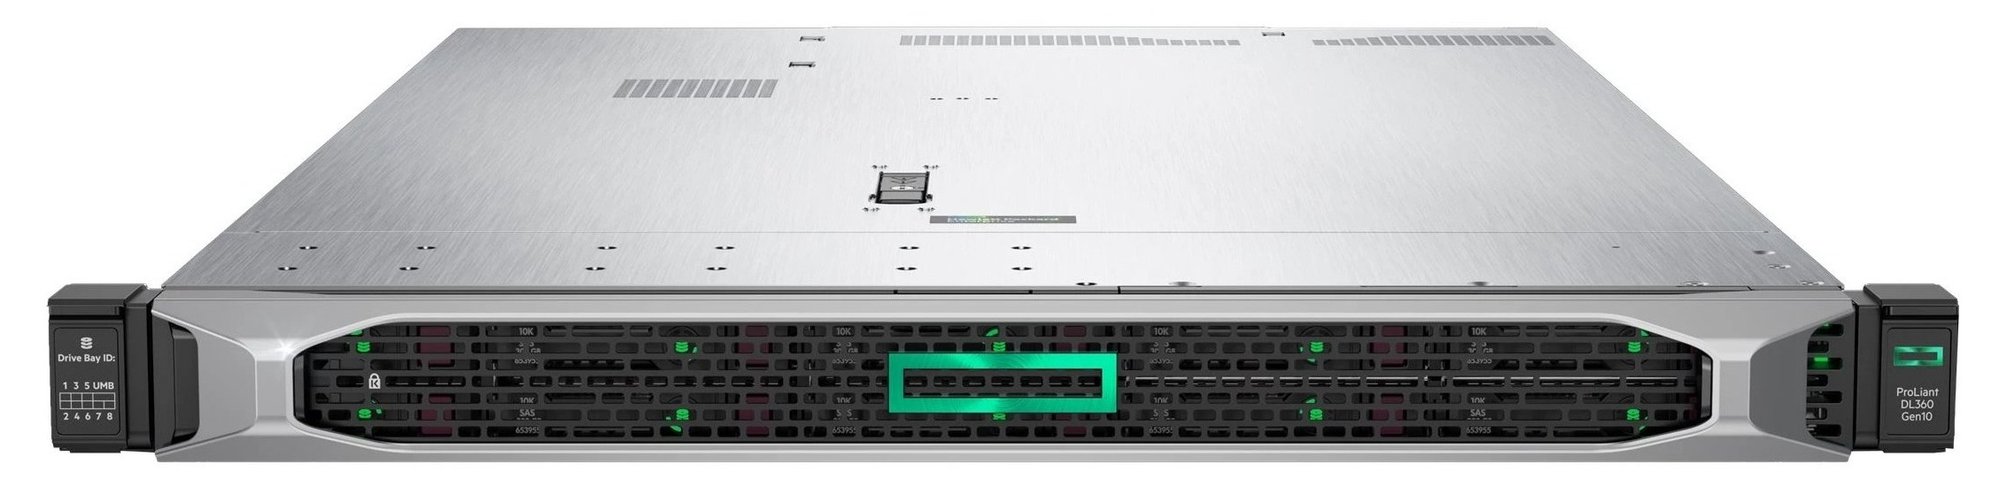 P40402-B21 | HPE Proliant Dl360 Gen10 Server - NEW